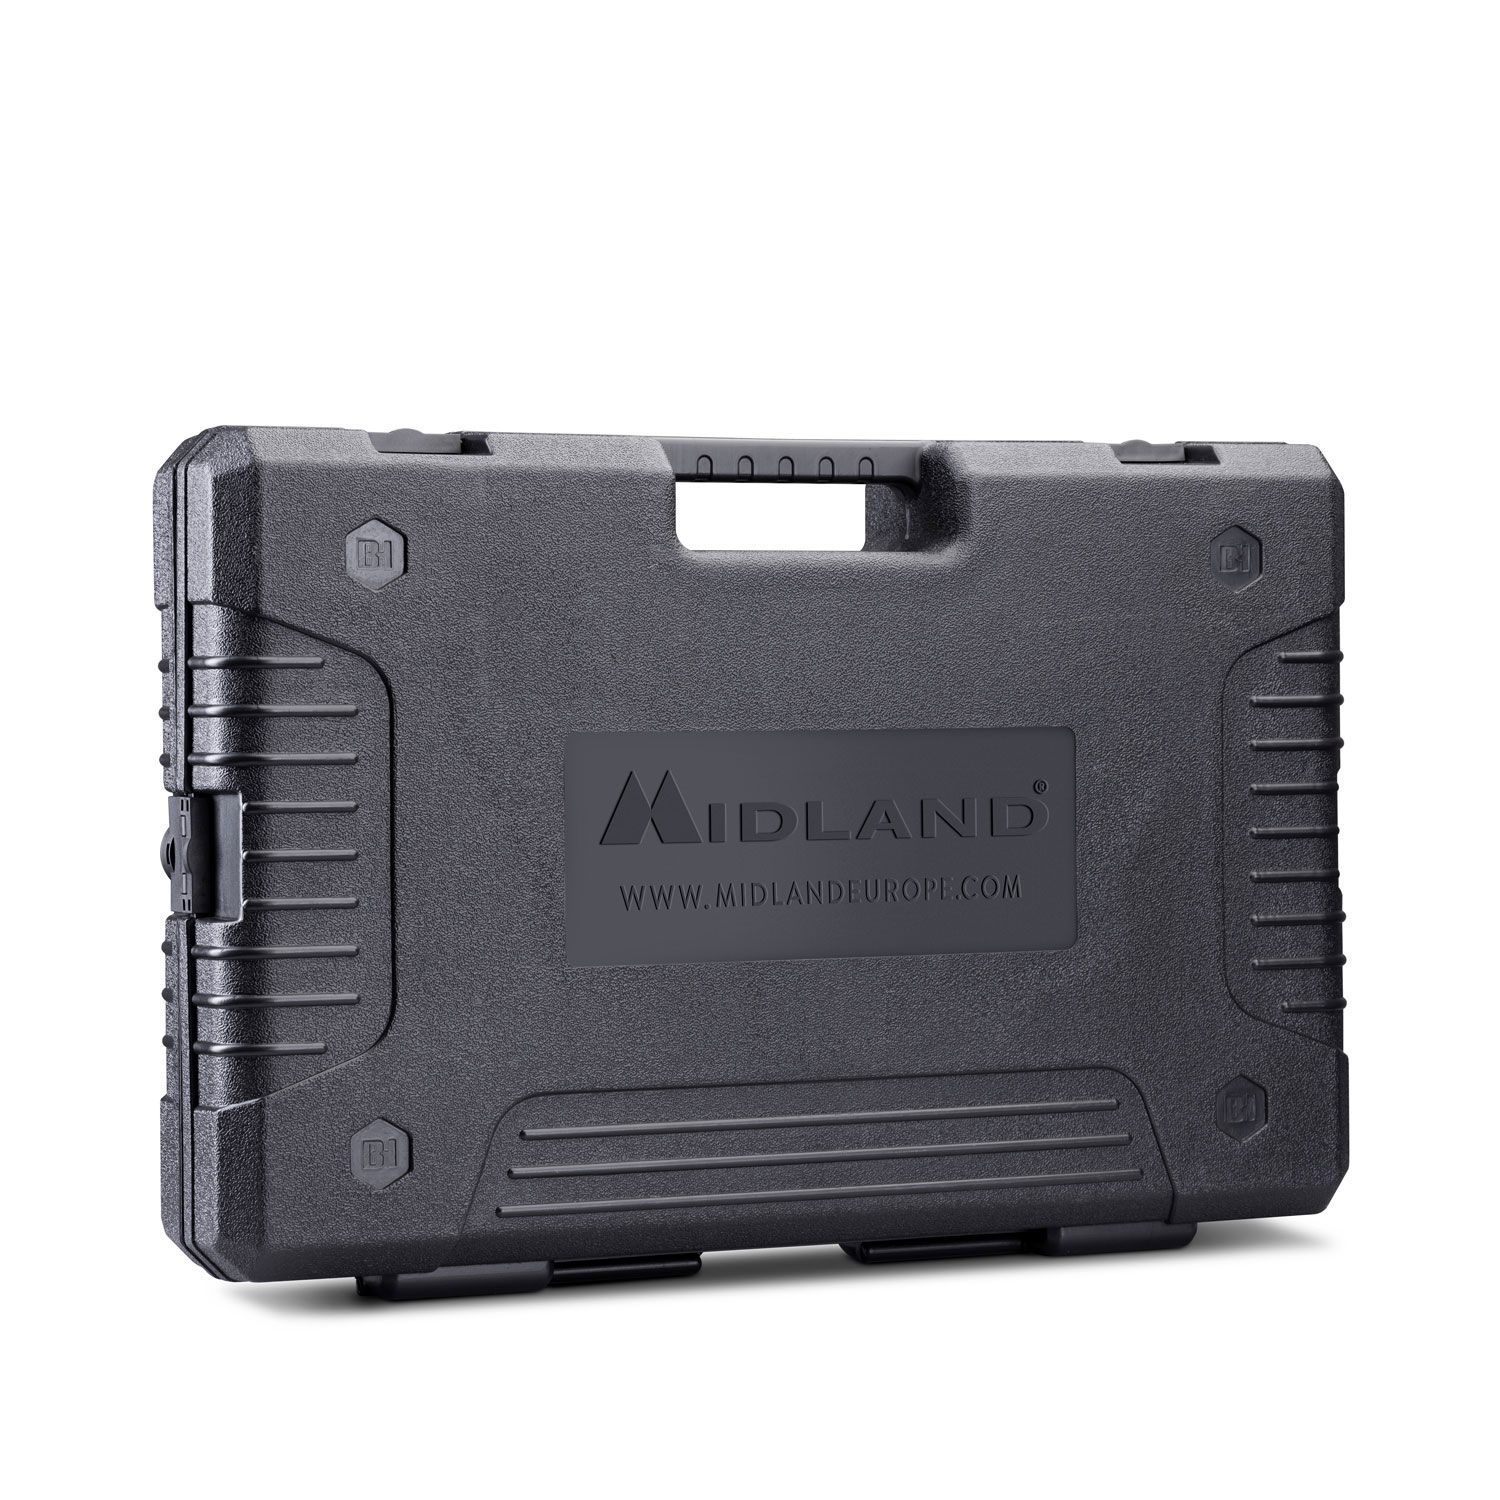 Midland G9 Pro Work Edition